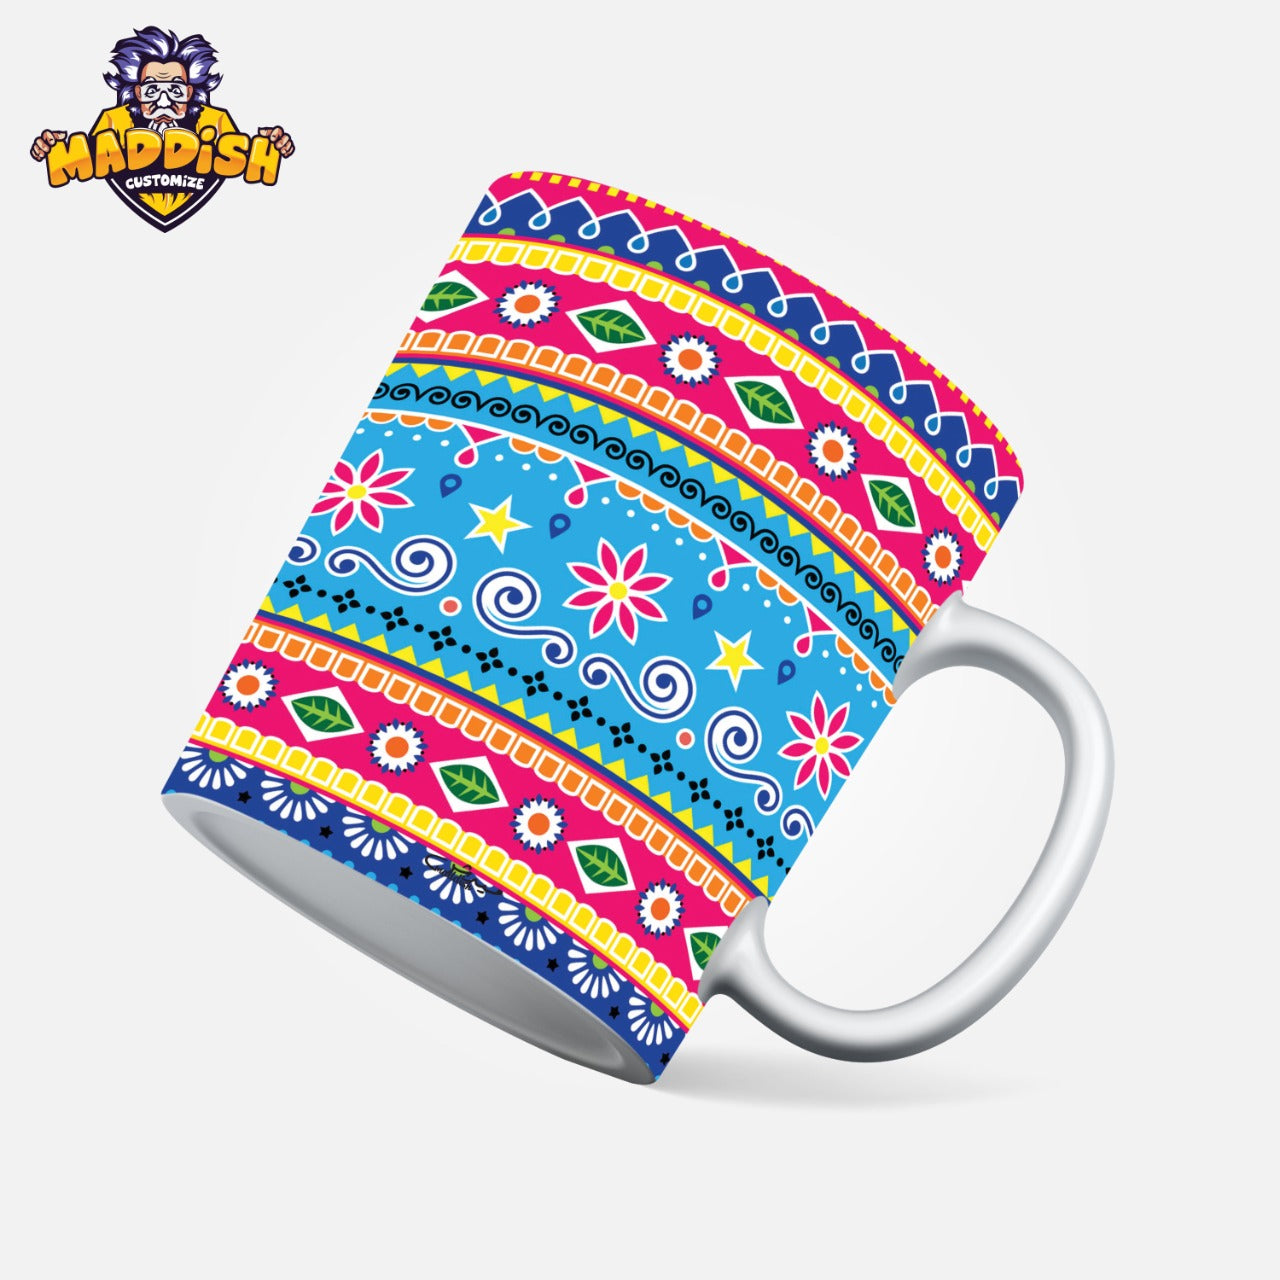 Customized Tea Mug